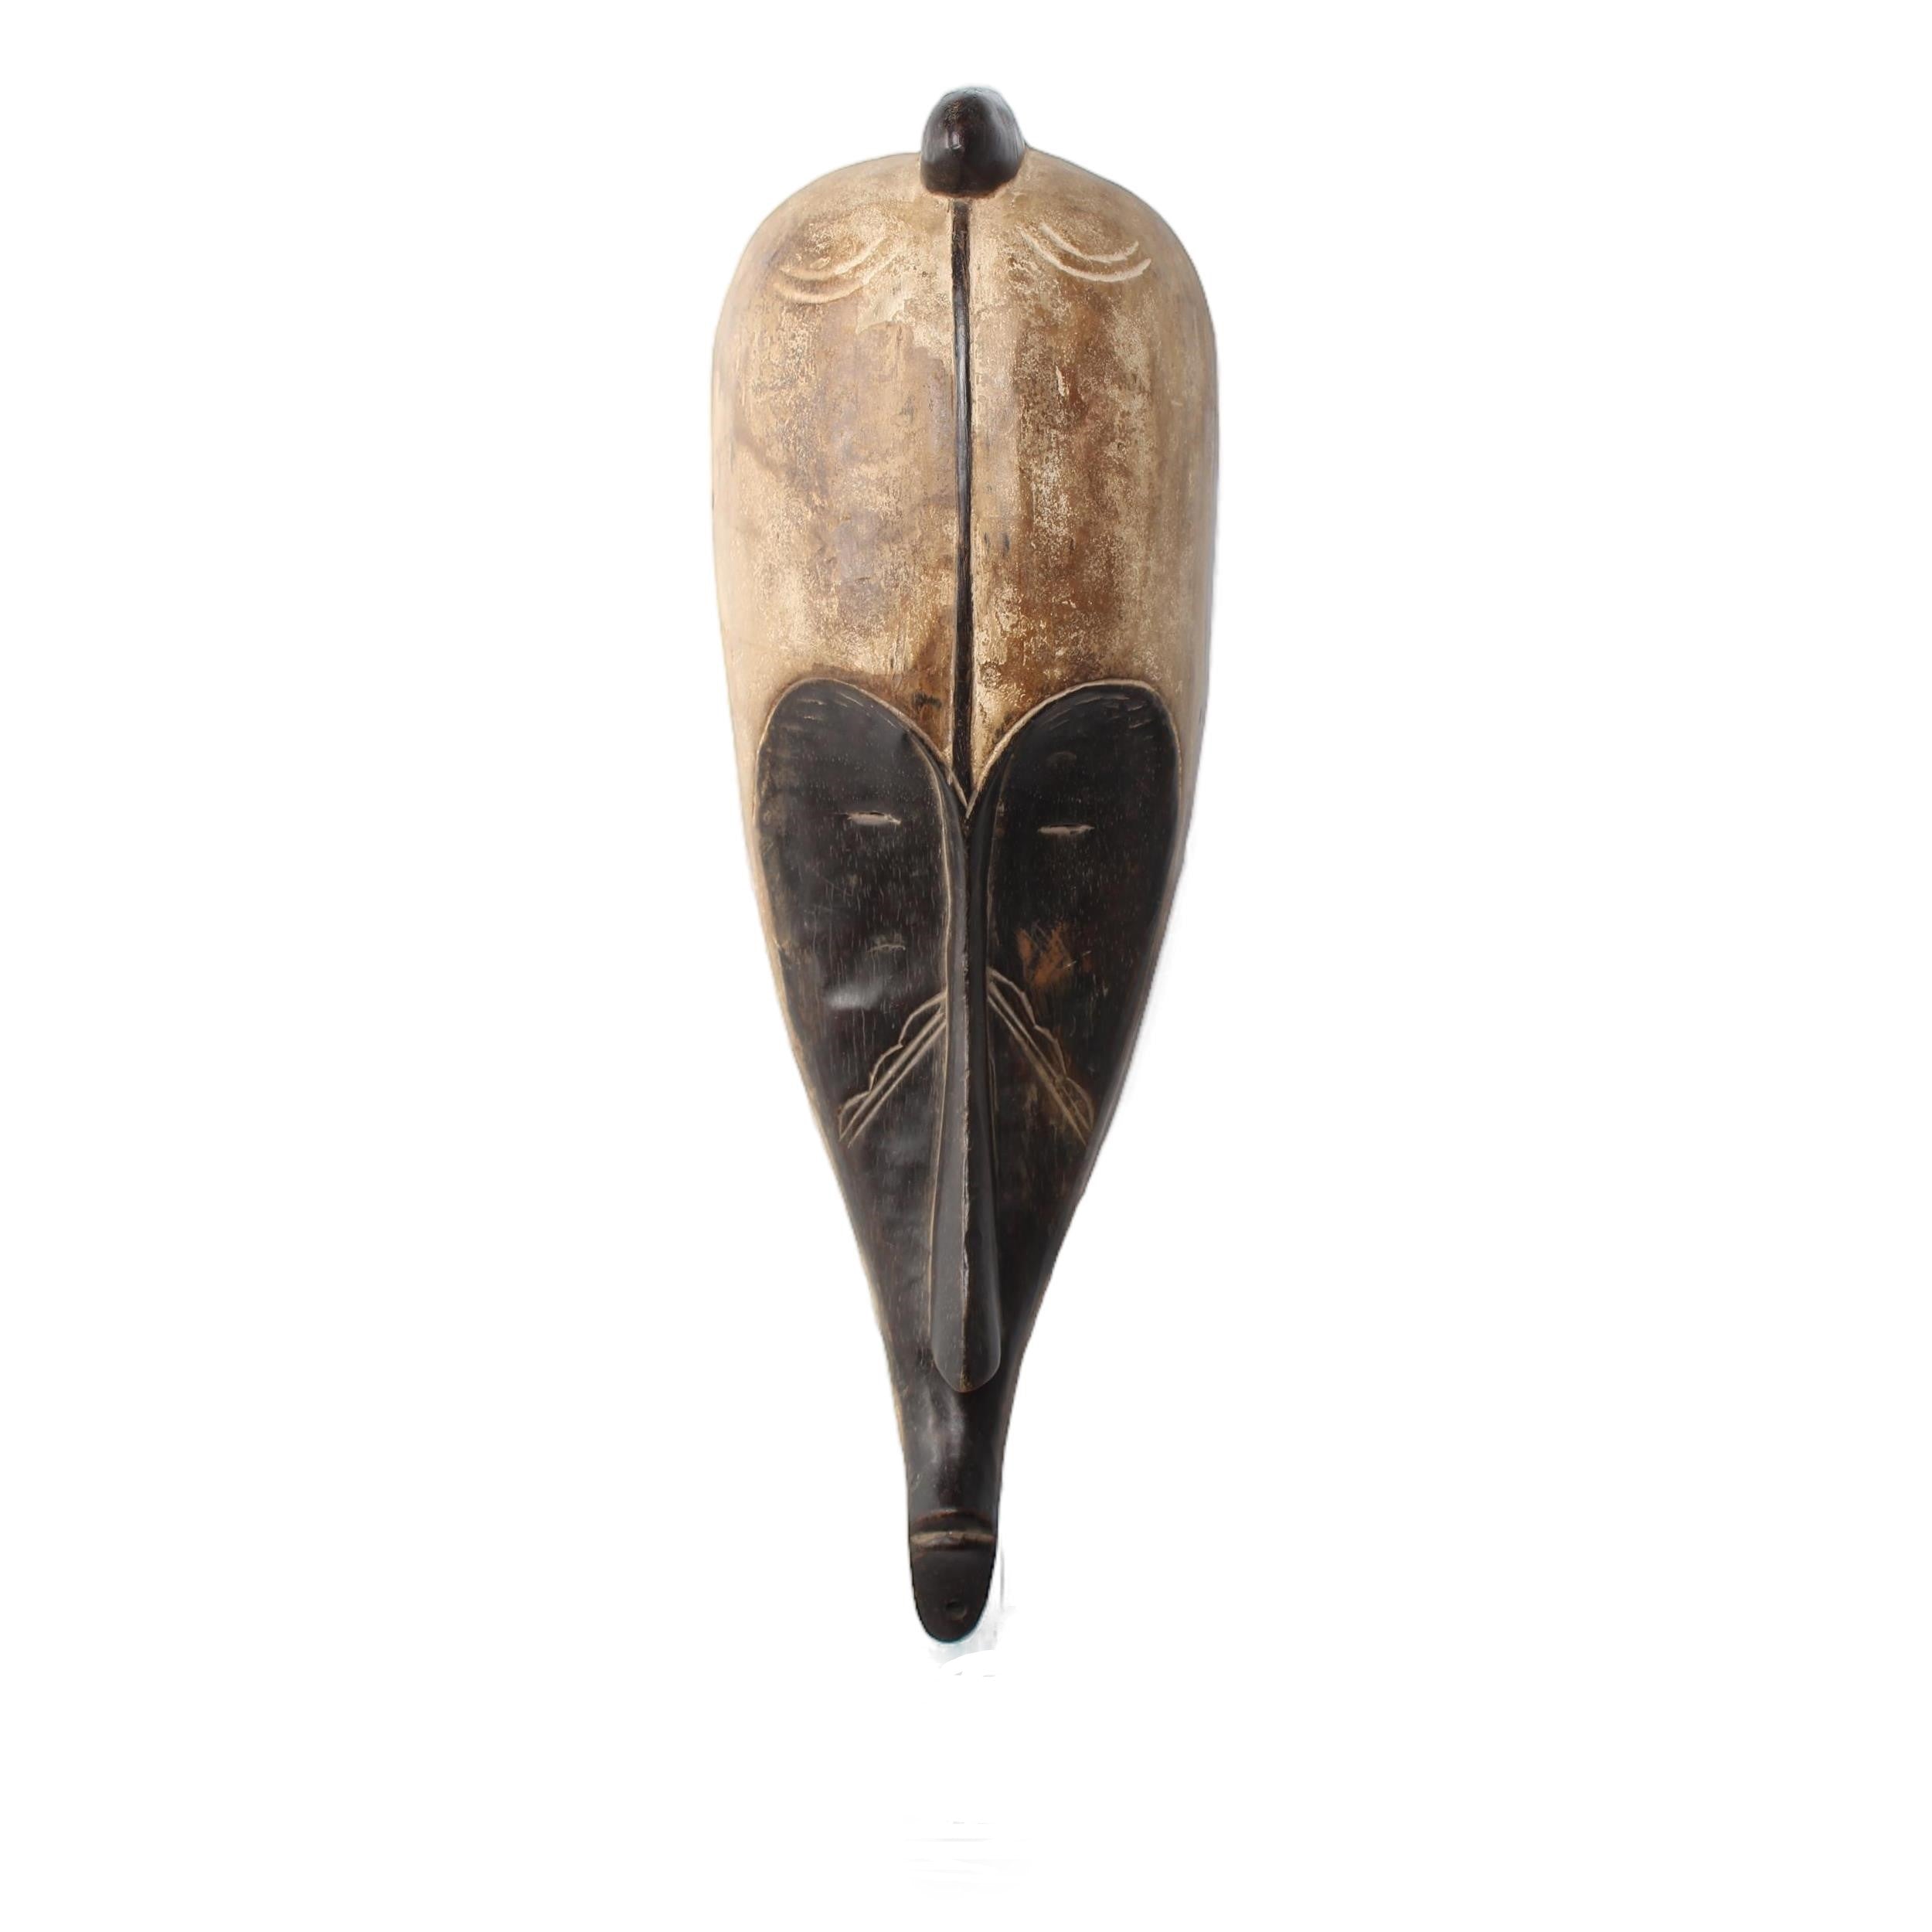 Fang Tribe Mask ~25.6" Tall